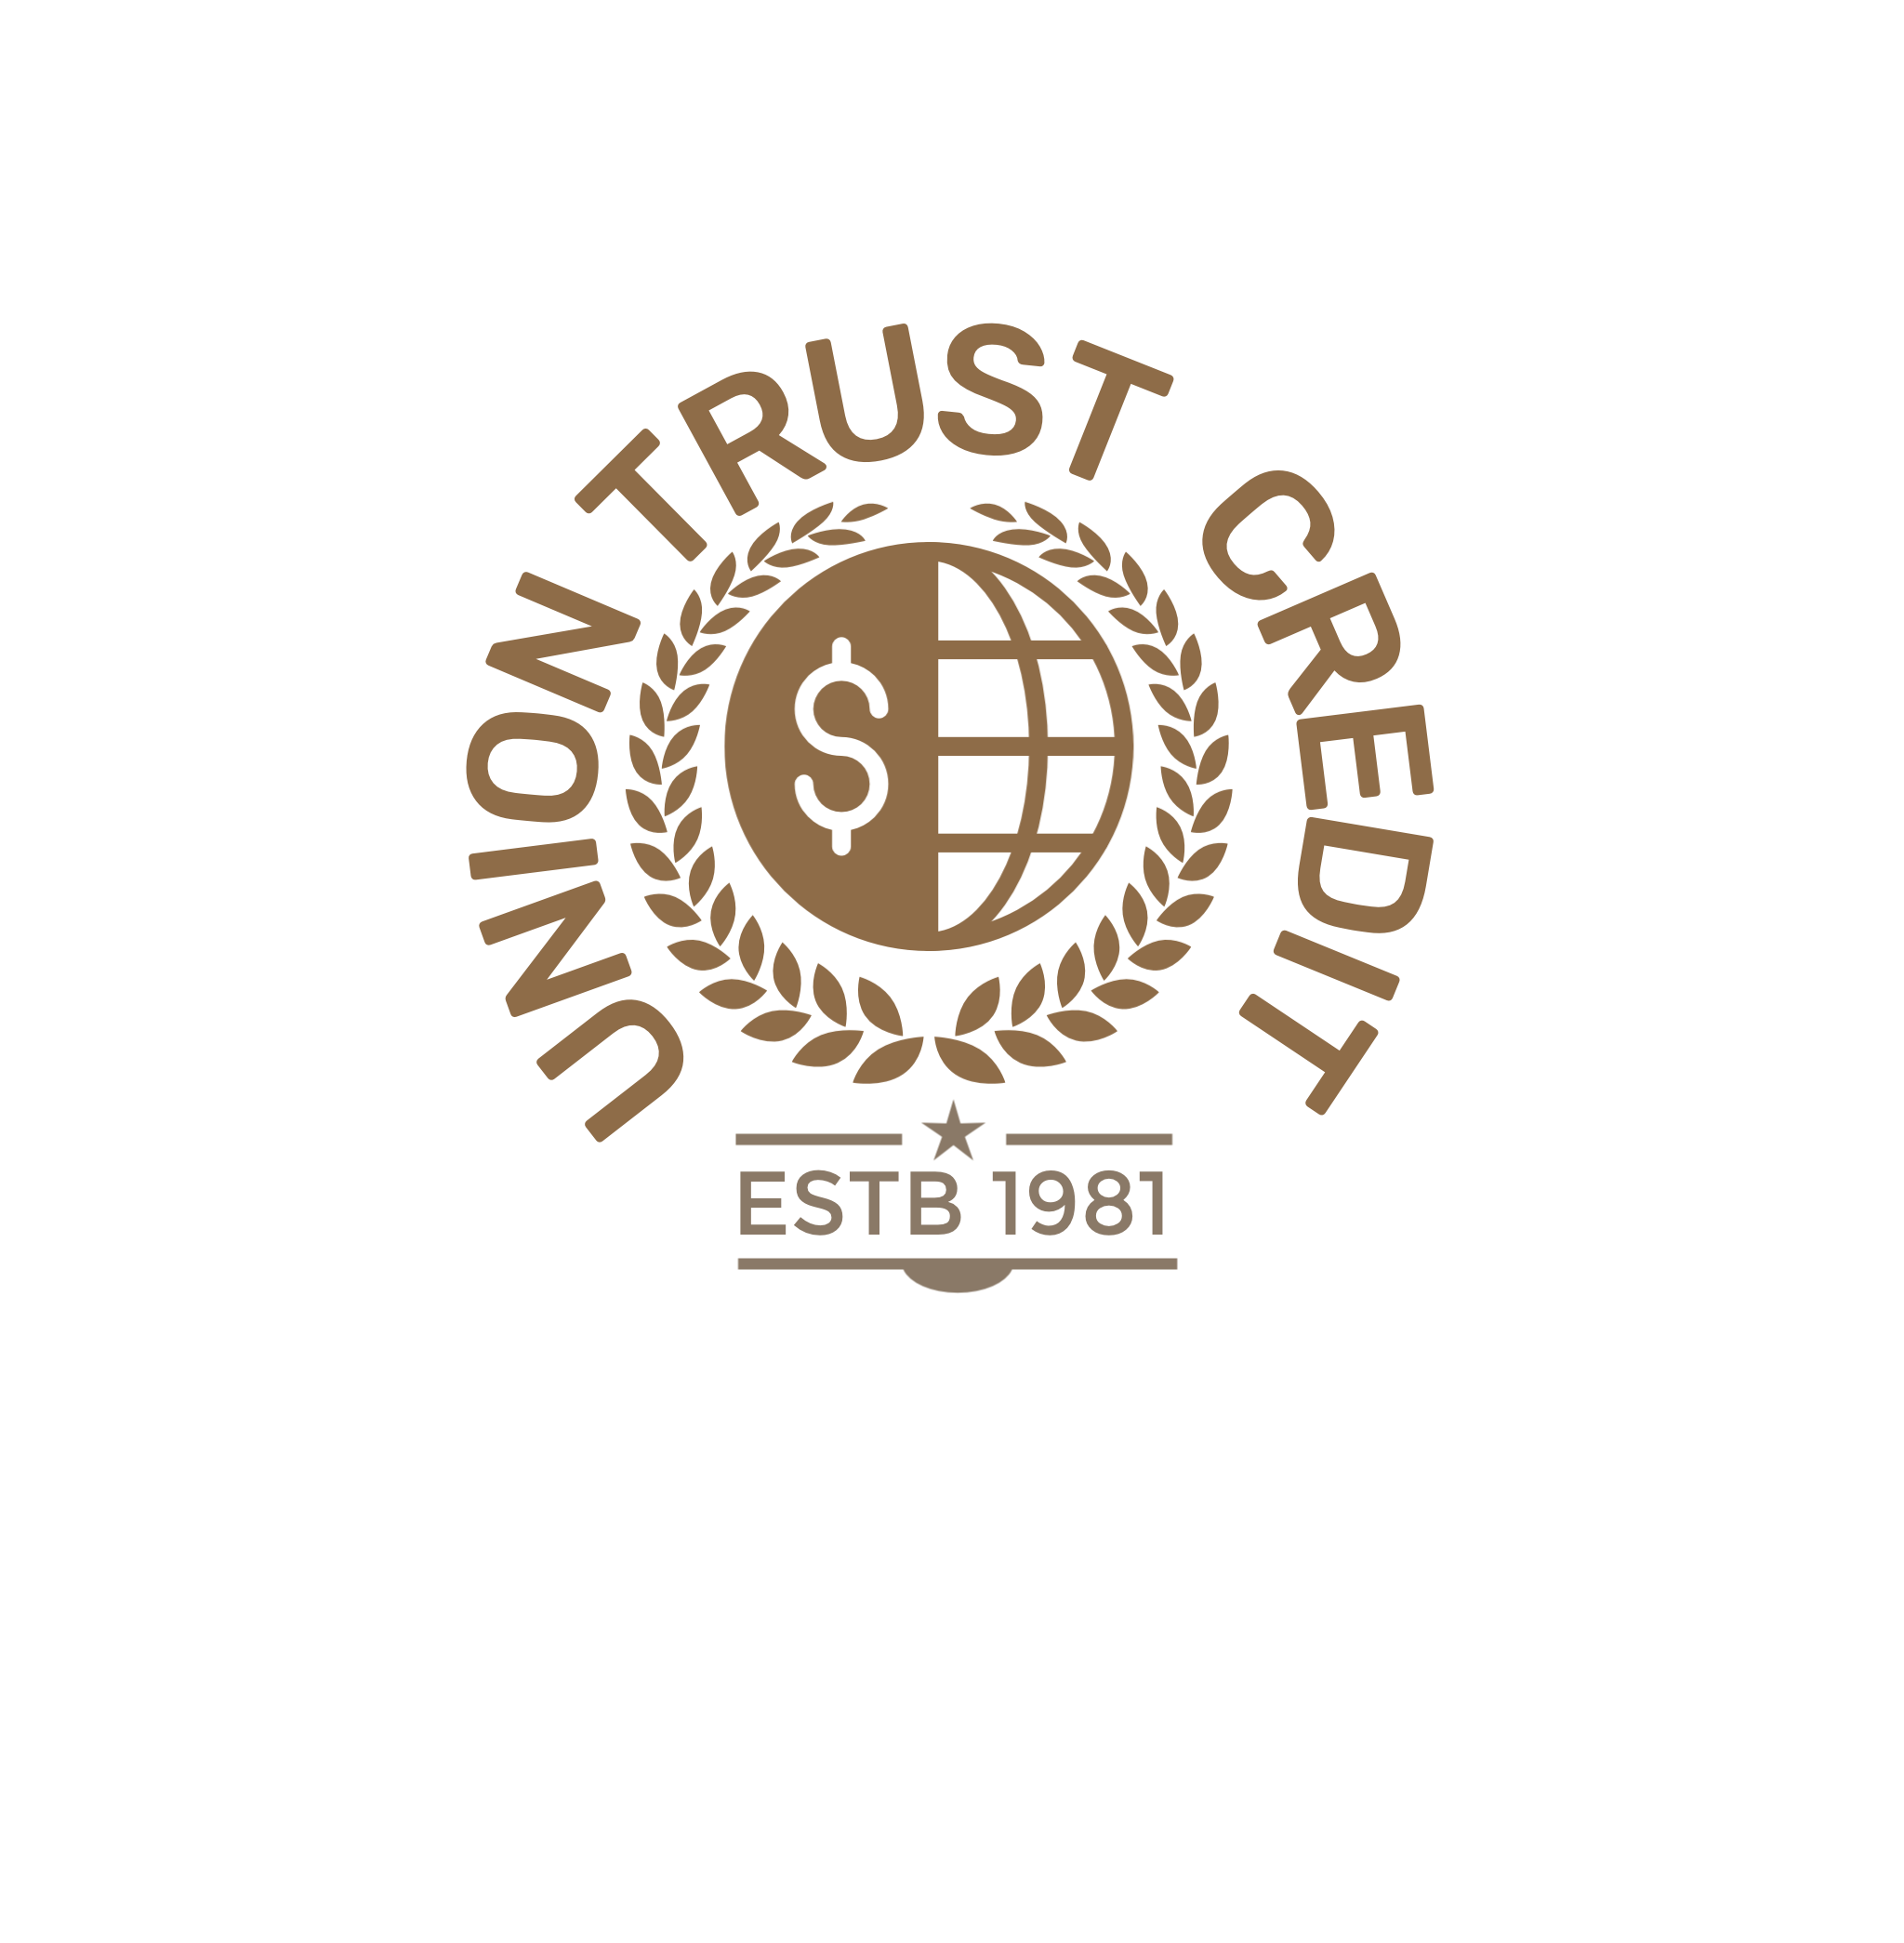 Union Trust Credit